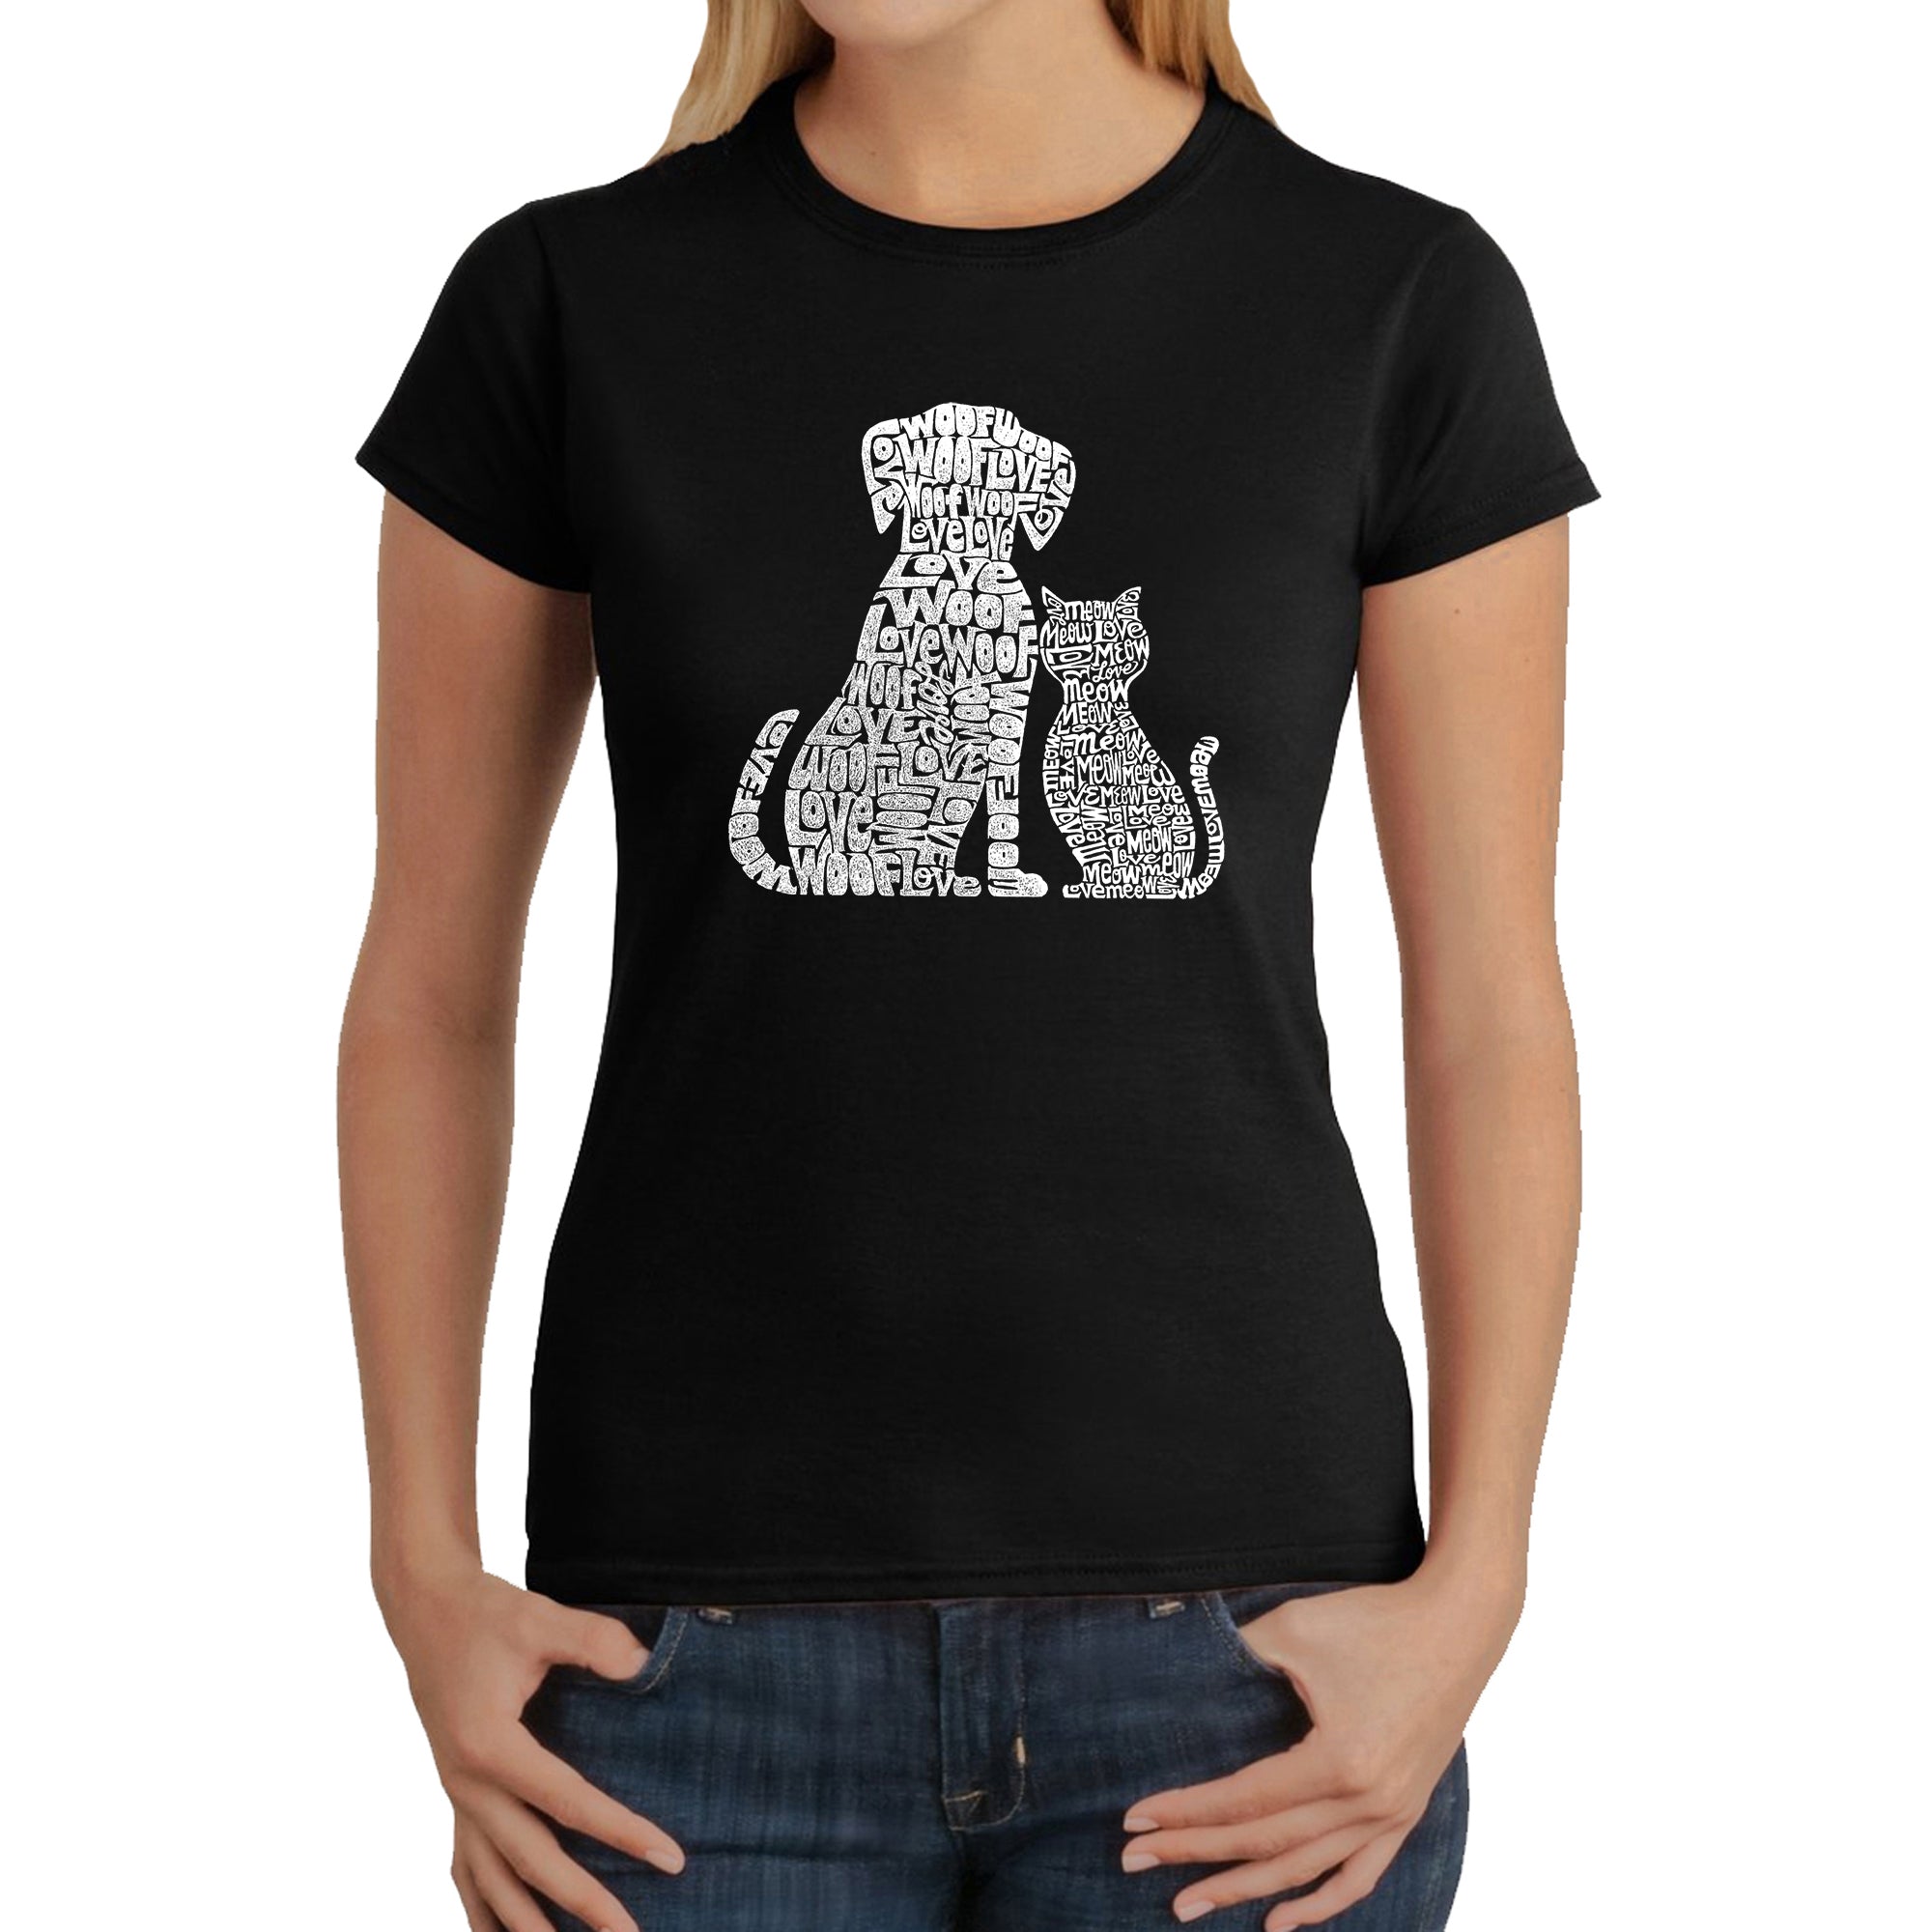 Dogs And Cats - Women's Word Art T-Shirt - Pink - Medium